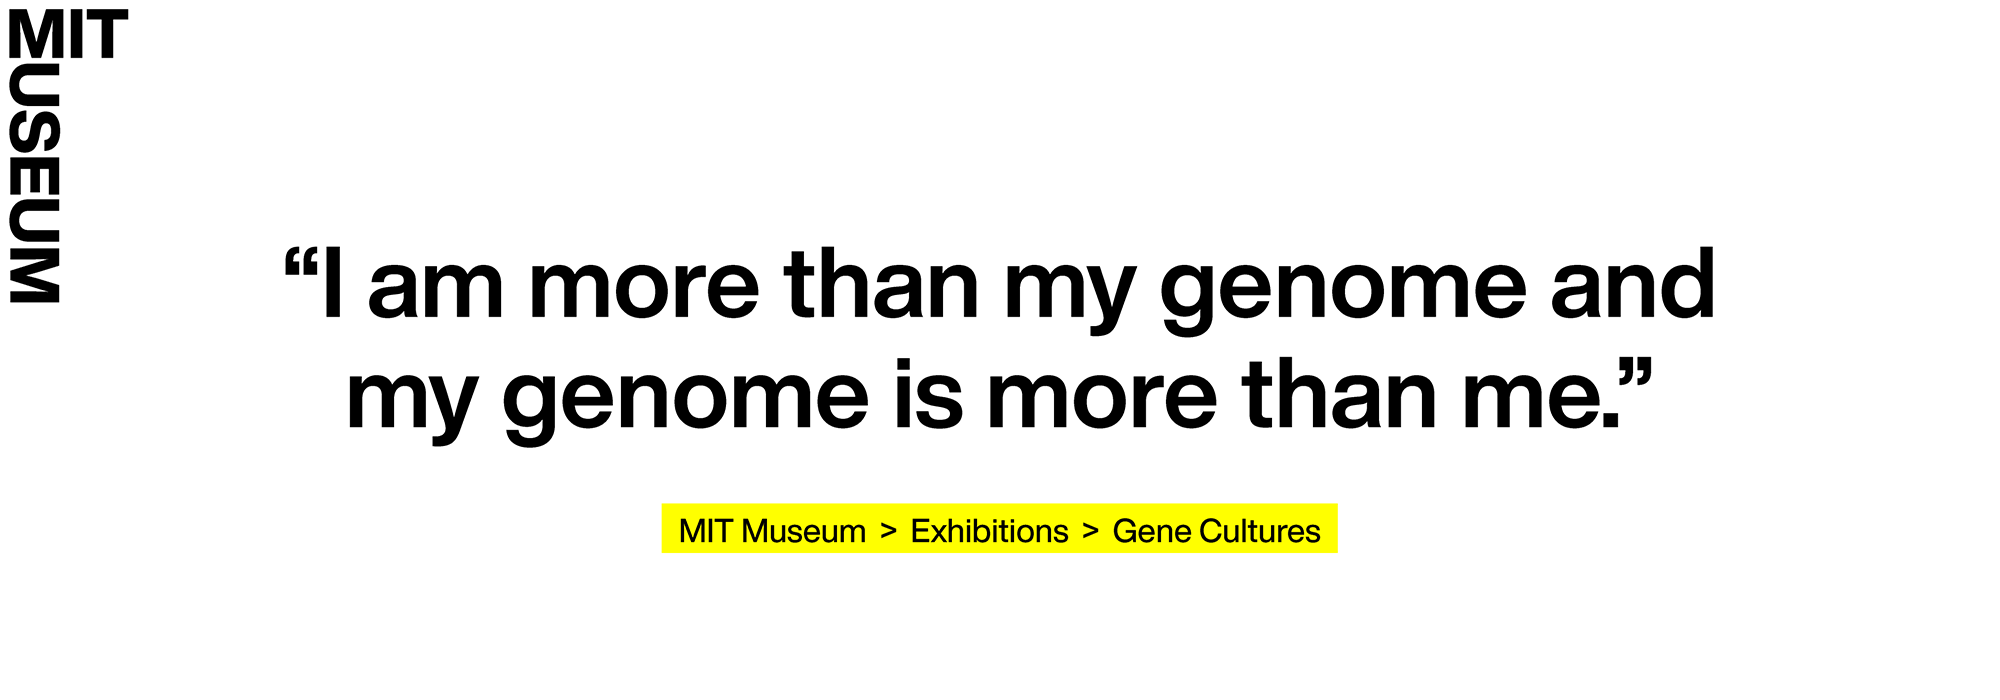 MIT MUSEUM GENE CULTURES EXHIBIT  Martin Krzywinski / science + art / Canada's Michael Smith Genome Sciences Center / http://mkweb.bcgsc.ca